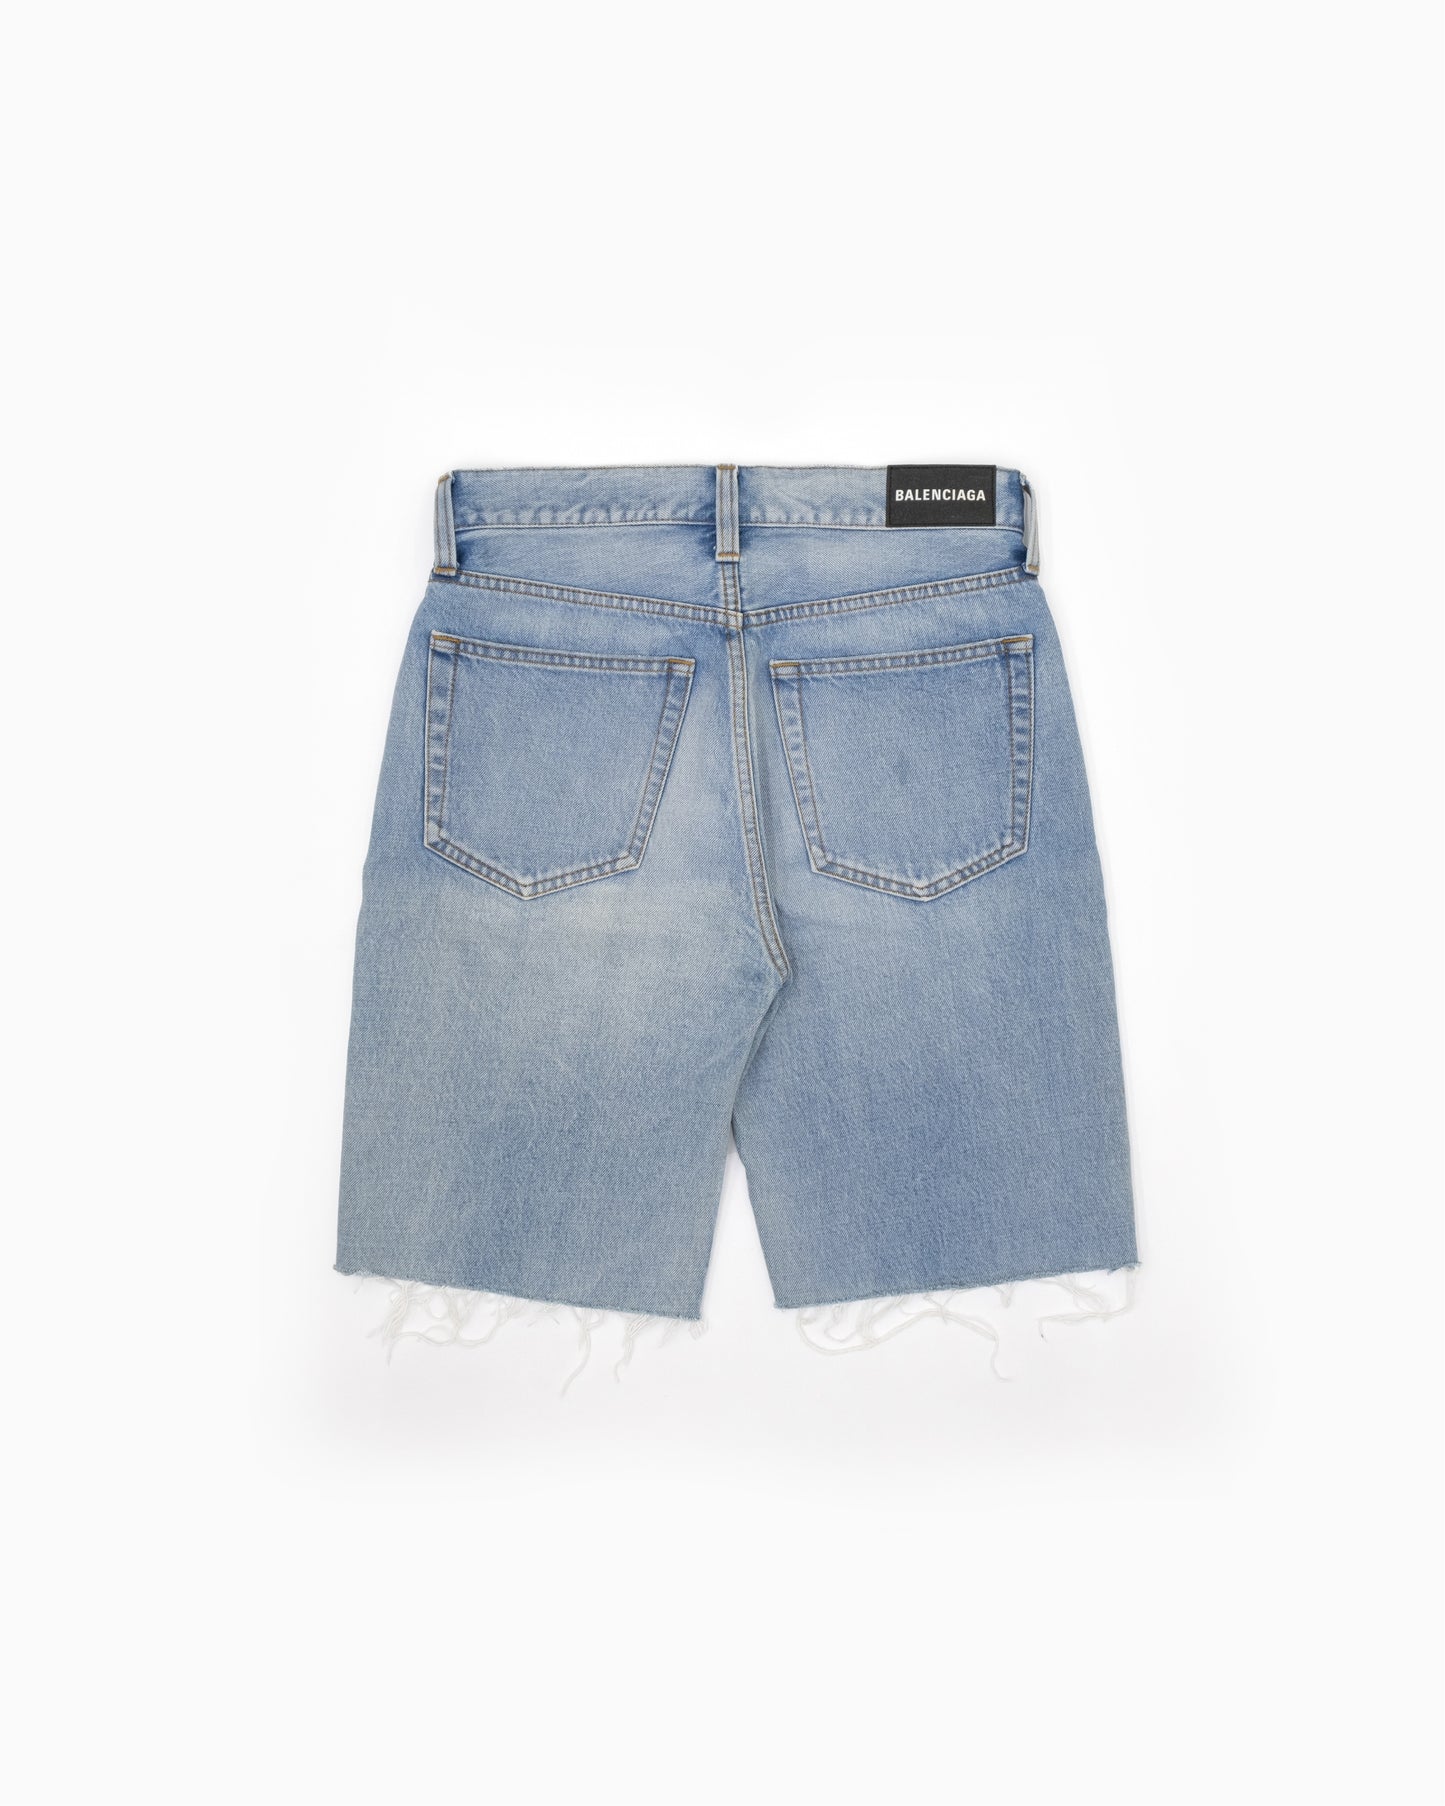 Balenciaga AW18 Denim Shorts